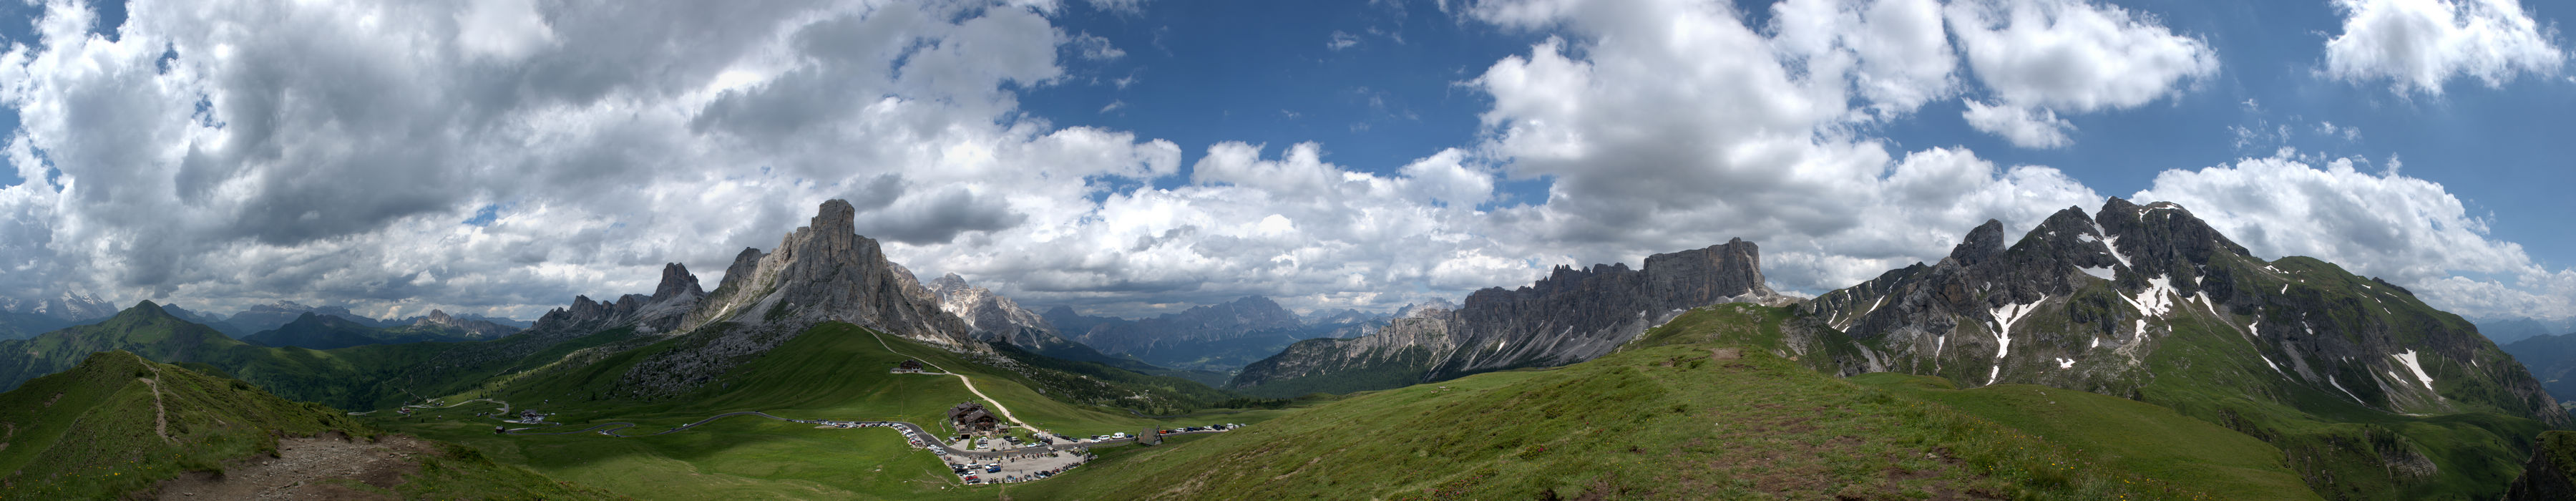 Dolomiti, Giau Averau Nuvolau RaGusela LastoiFormin